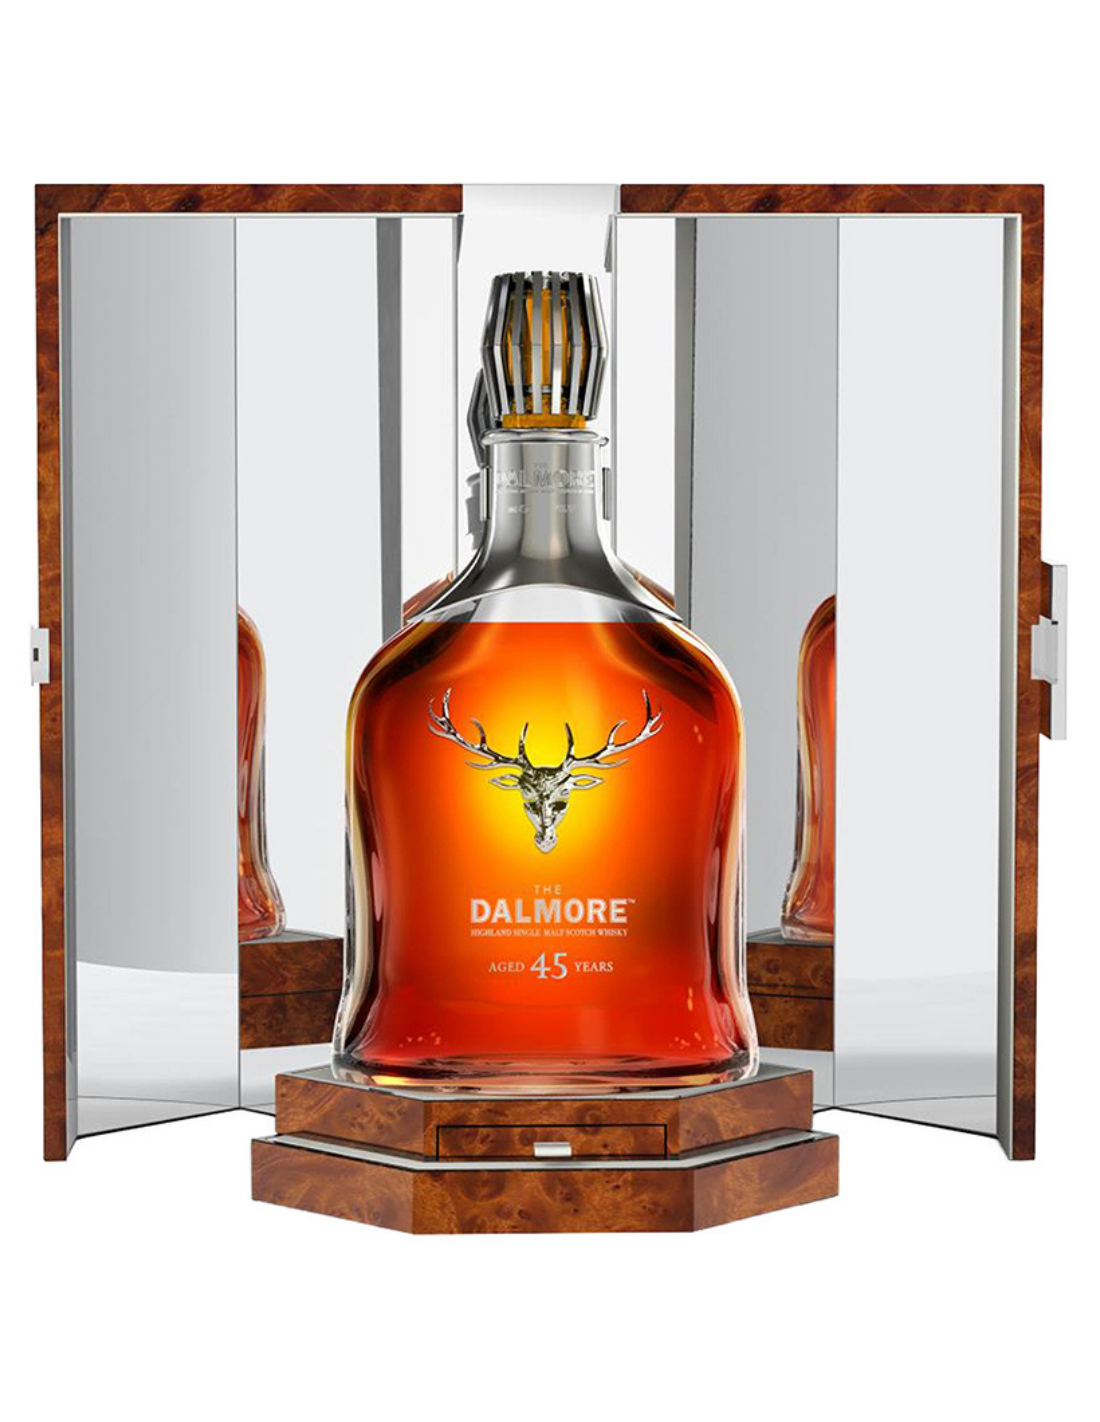 Whisky The Dalmore 45 Years Single Malt Scotch, 0.7L, 40% alc., Marea Britanie alcooldiscount.ro